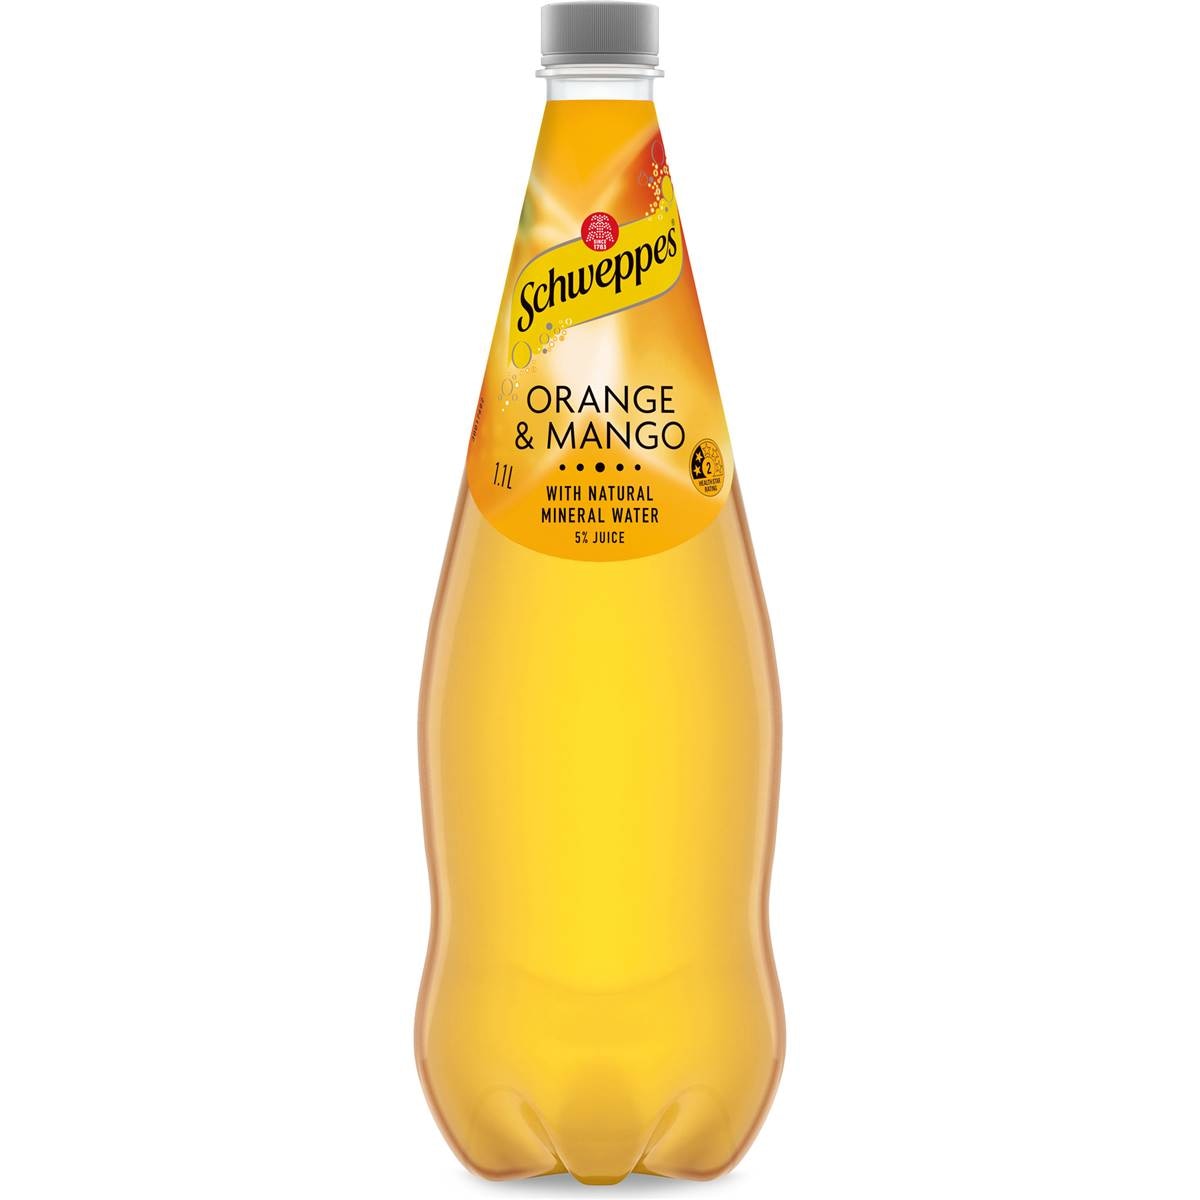 Calories in Schweppes Natural Mineral Water Orange & Mango